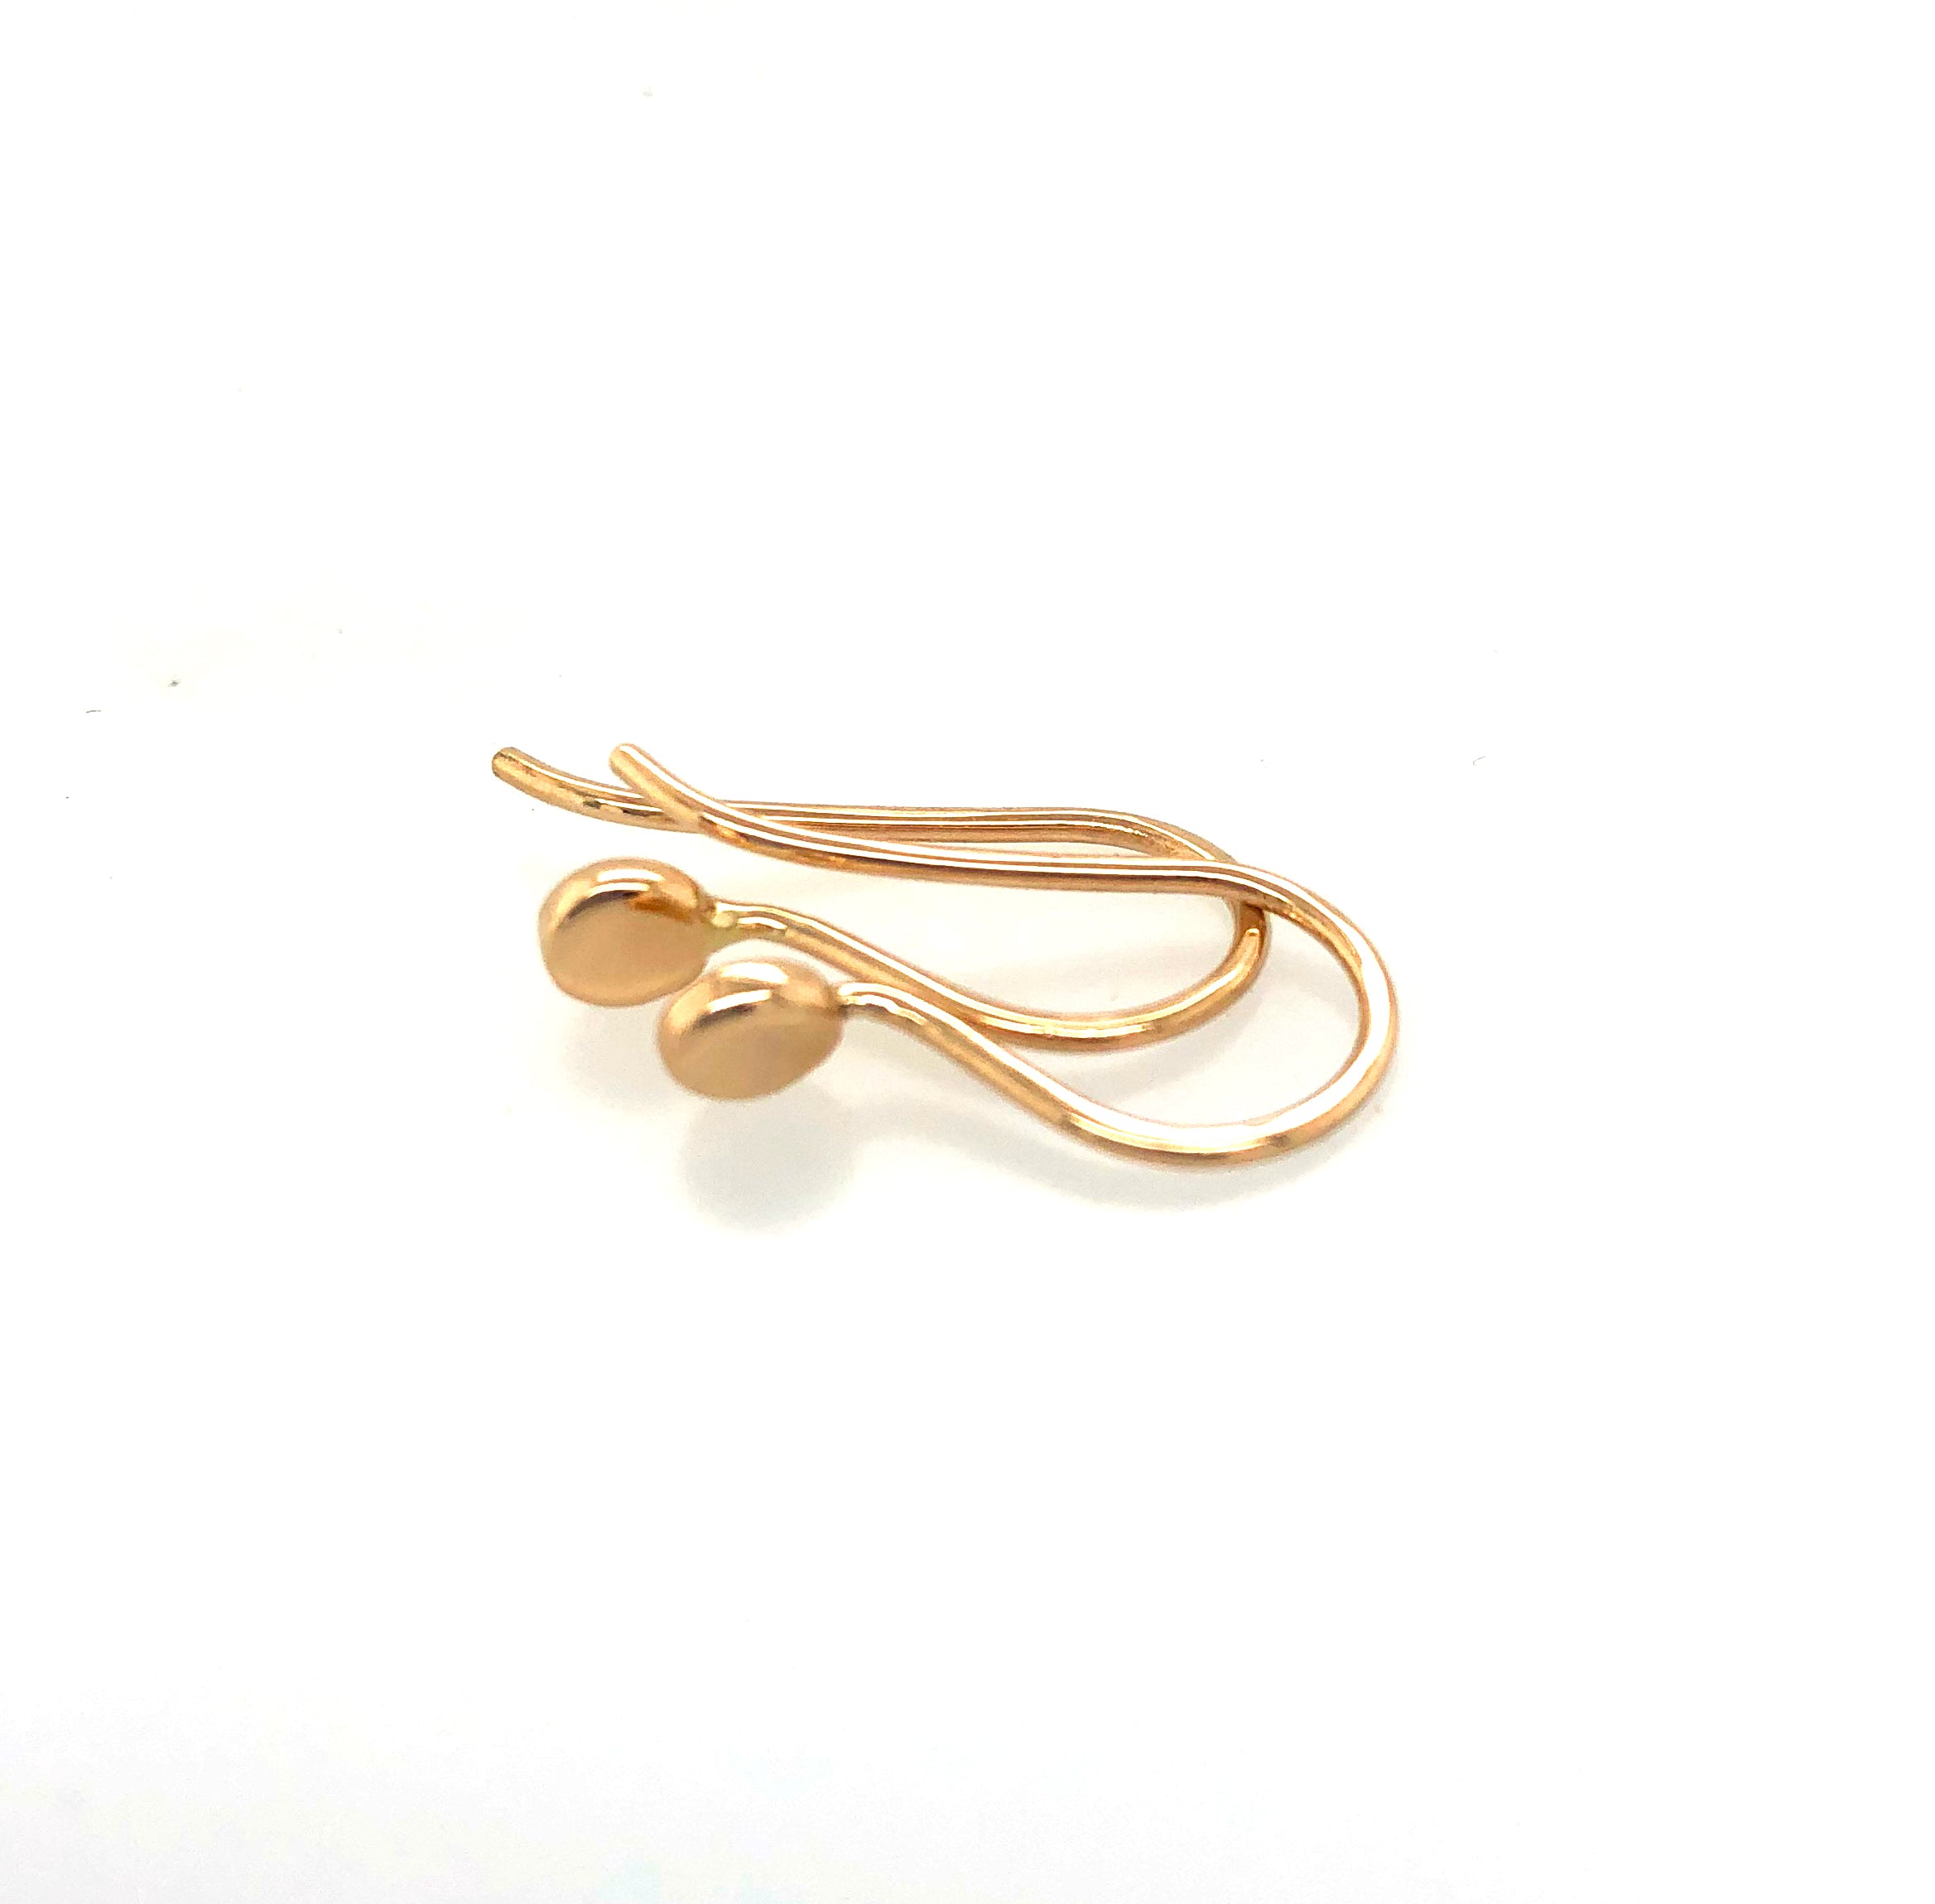 Solid Gold Circle Disc Earrings, 14k Solid Gold Earrings, Minimalist Everyday Dainty Earrings,  Tiny Coin Earrings, Simple Earrings